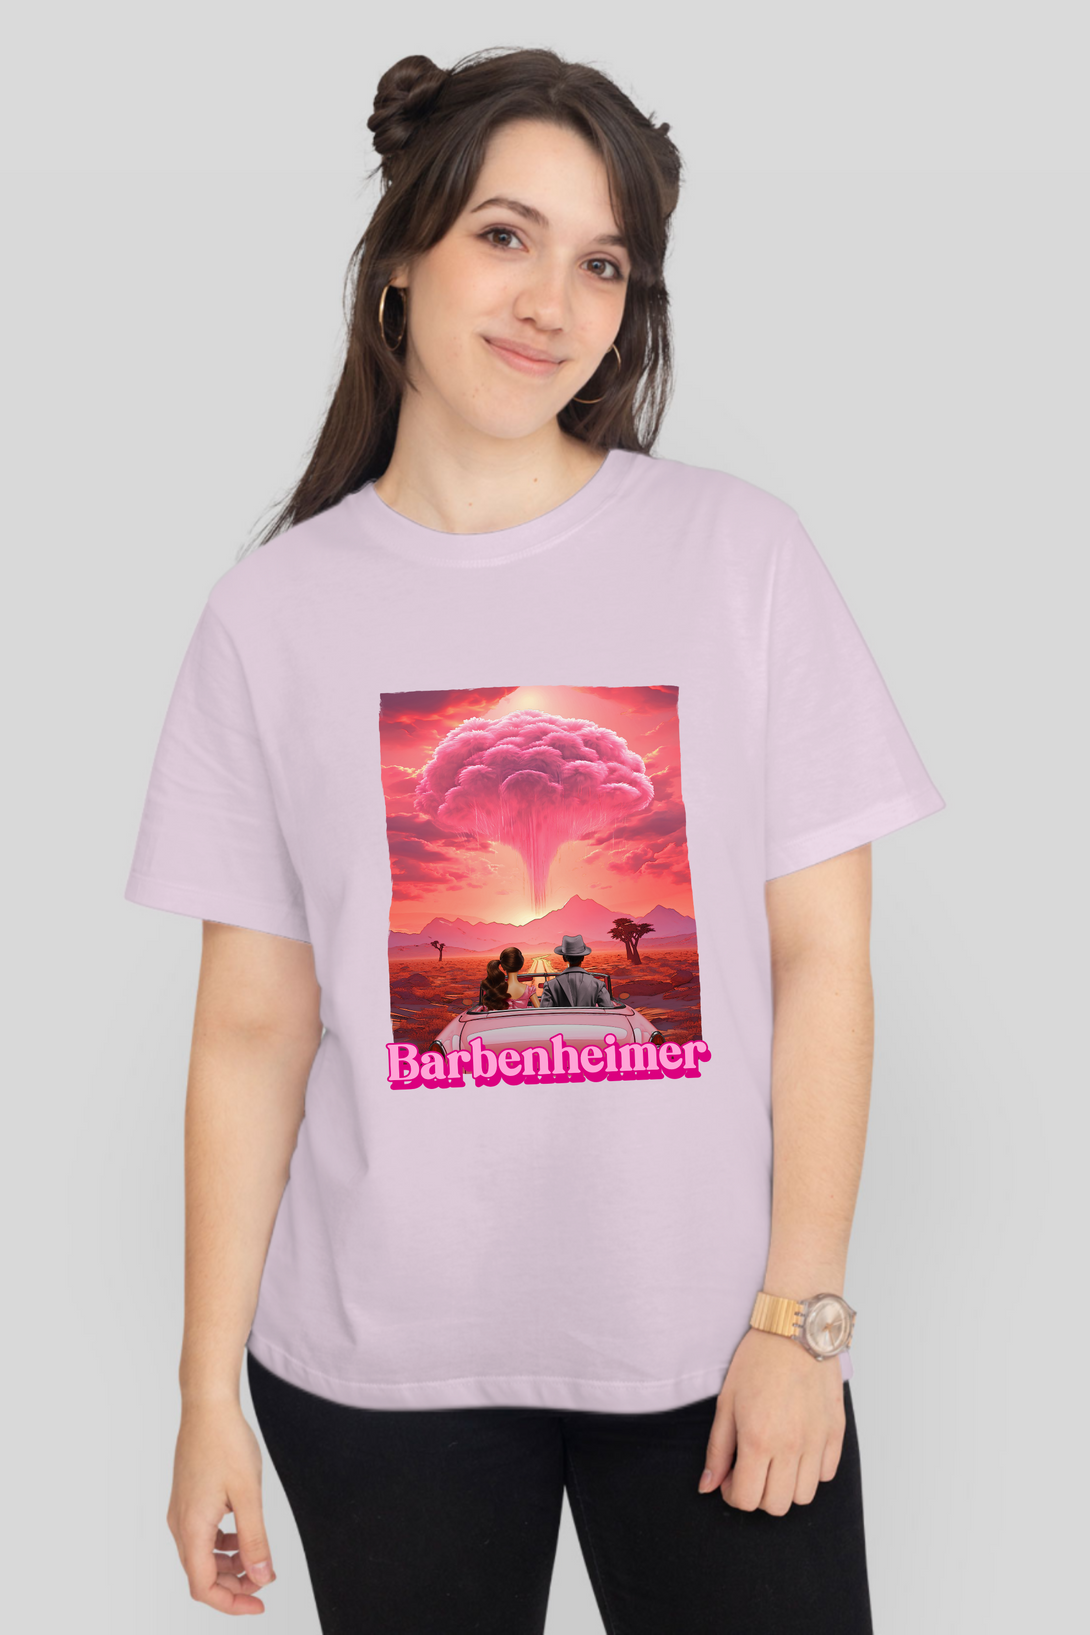 Barbienheimer Printed T-Shirt For Women - WowWaves - 7